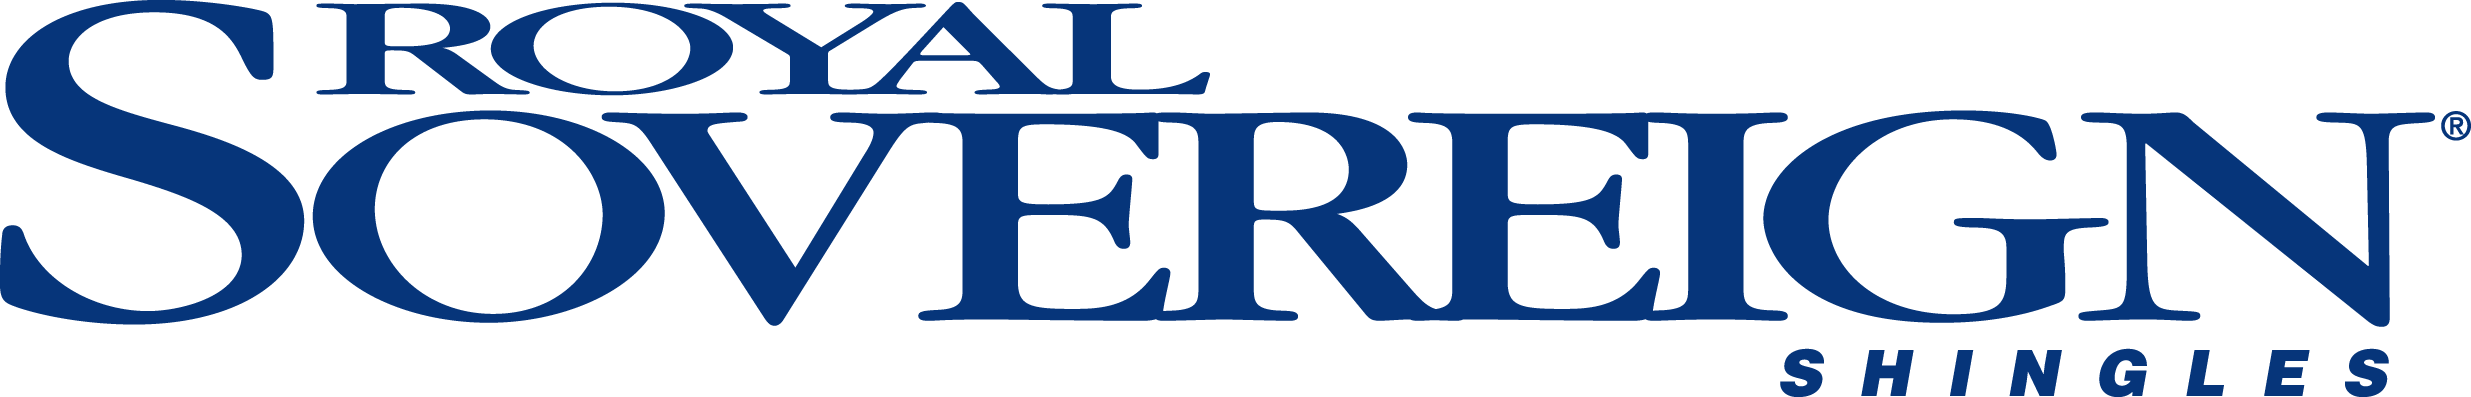 Royal Sovereign Shingles logo